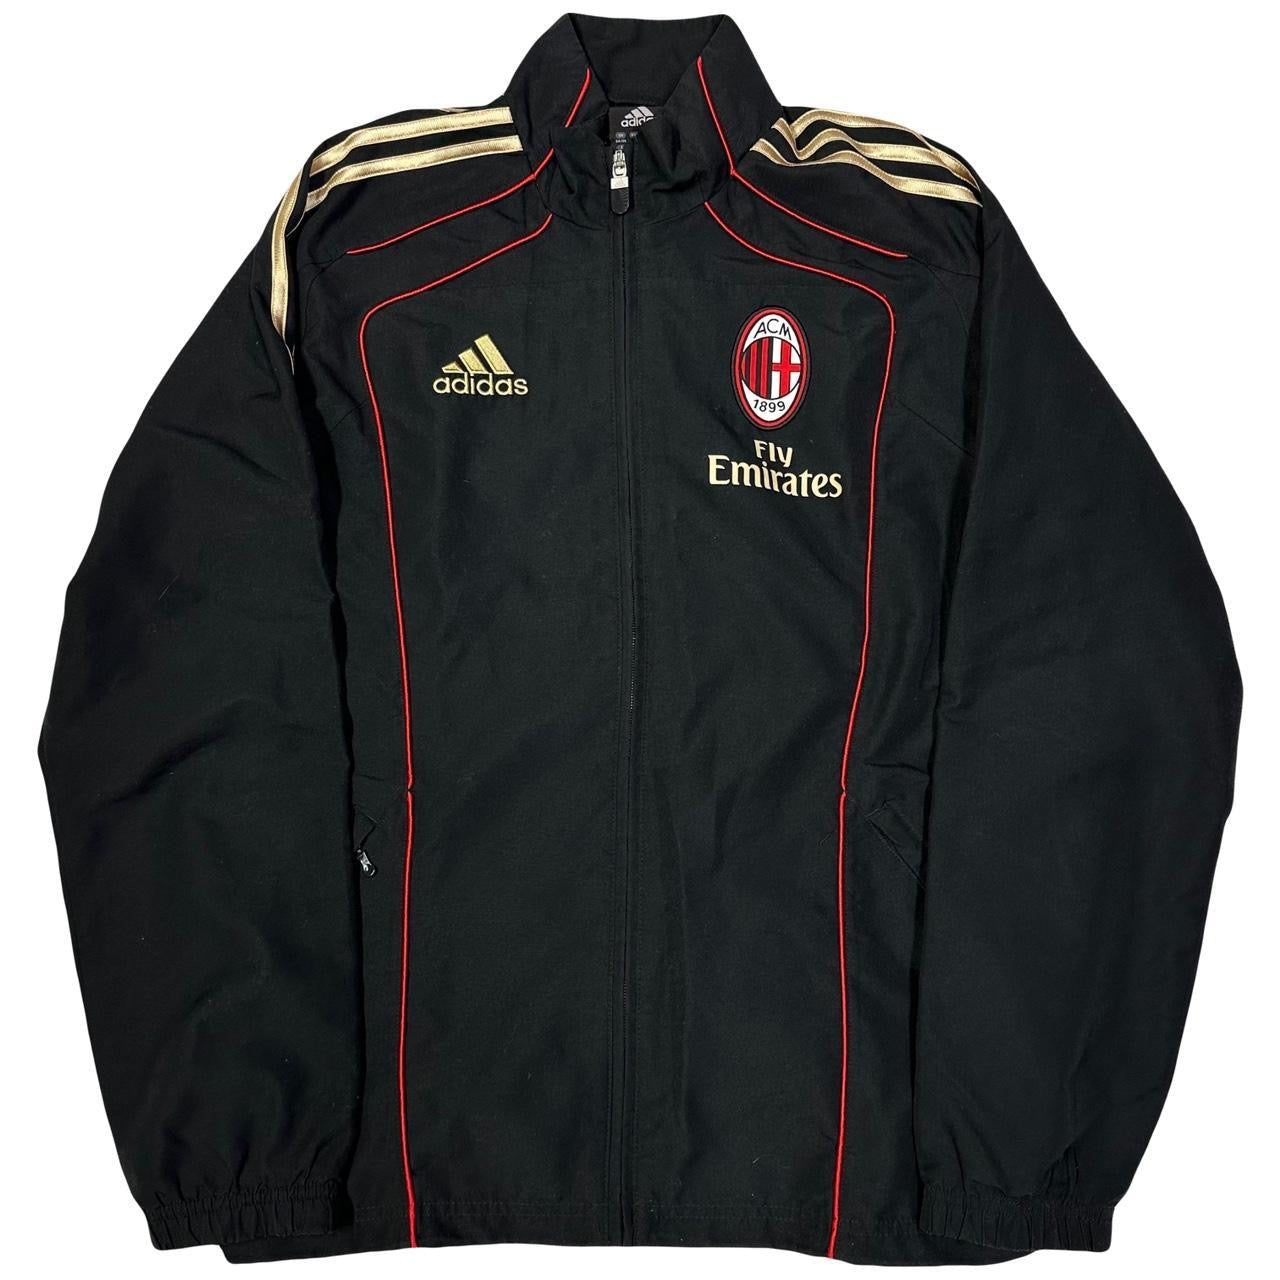 Adidas AC Milan 2010/12 Tracksuit In Black, Gold & Red ( M )